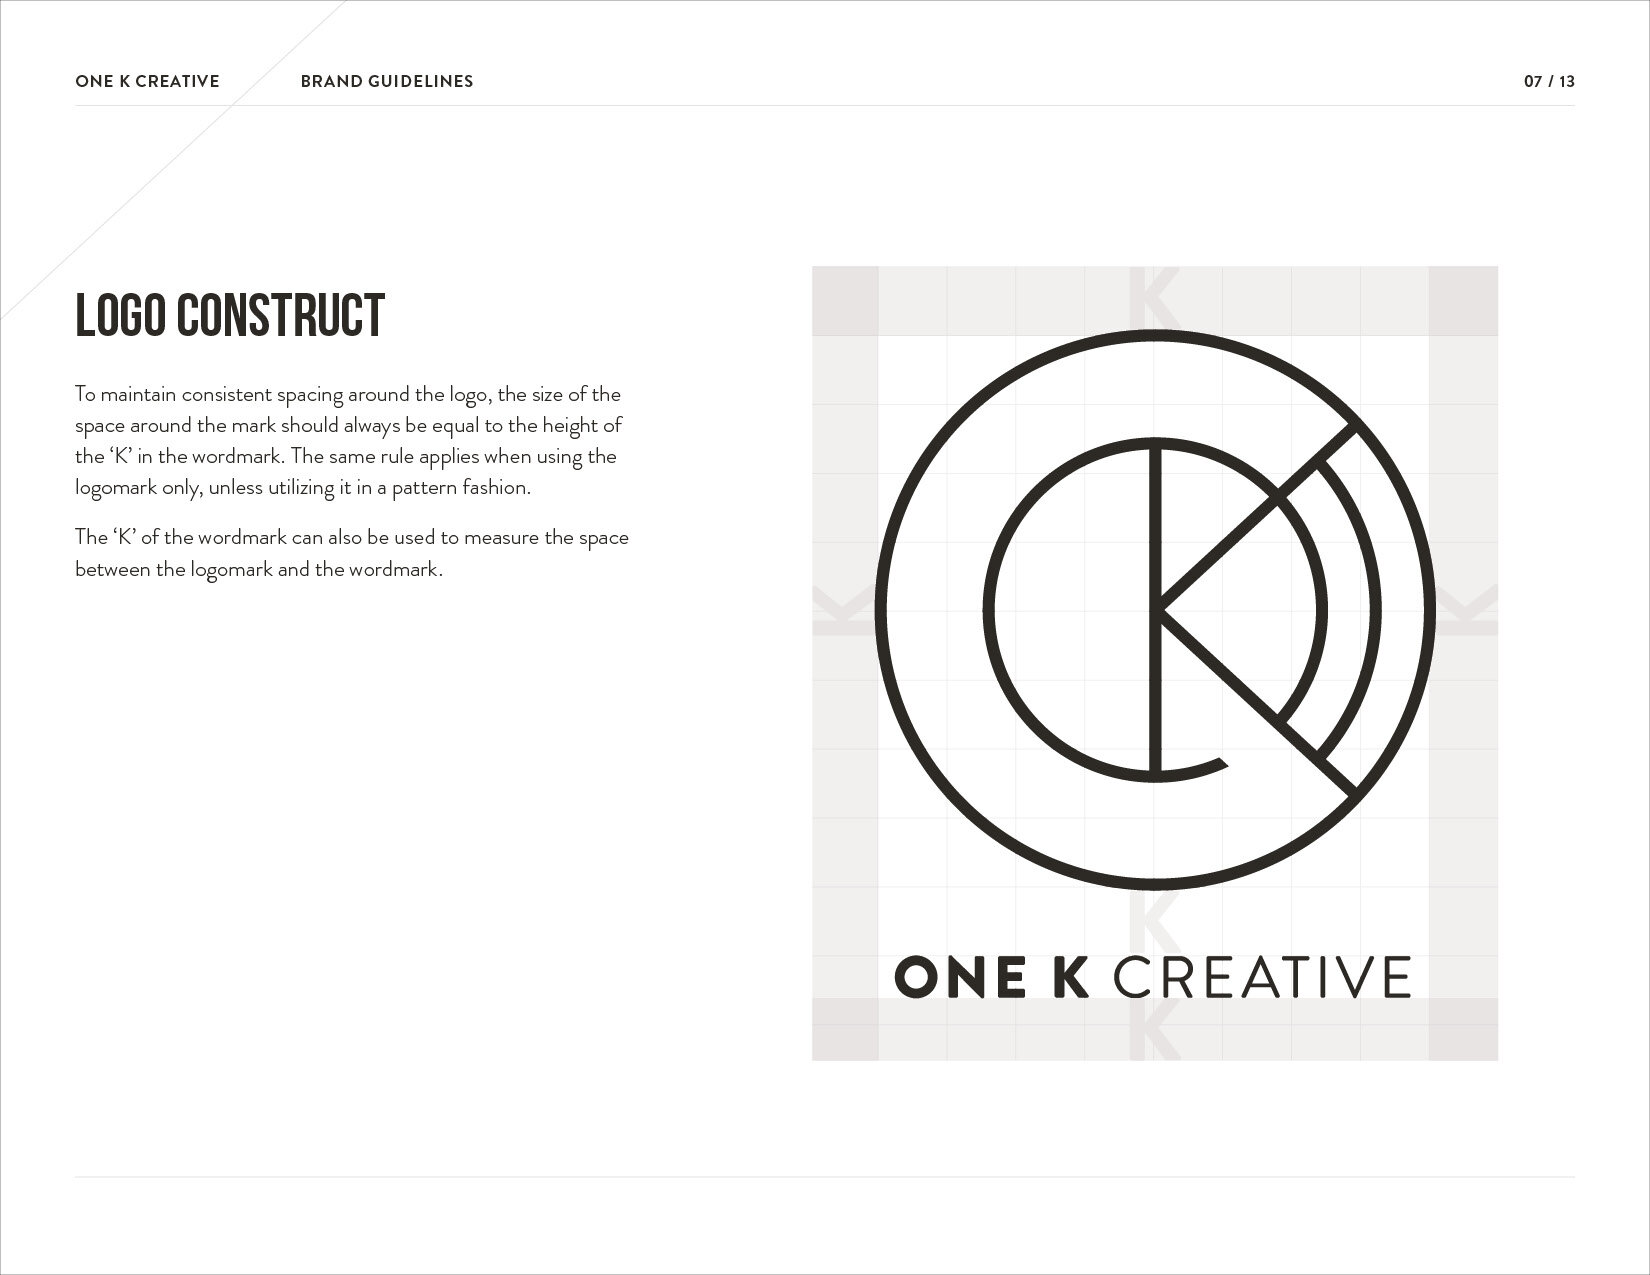 One K Creative - 2018 New Brand Guide10.jpg